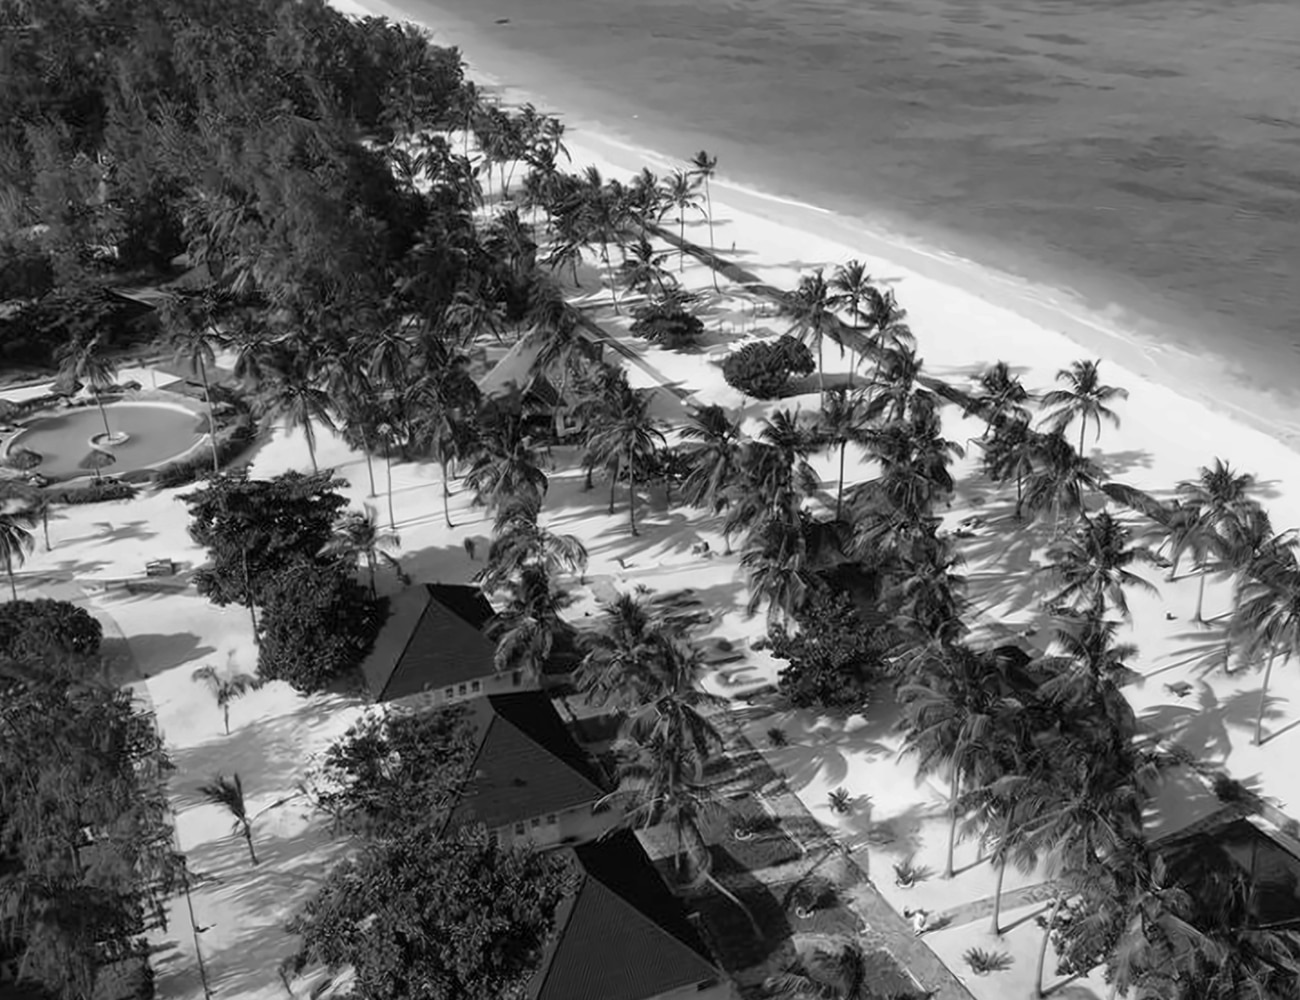 Views of Paje Beach in Zanzibar